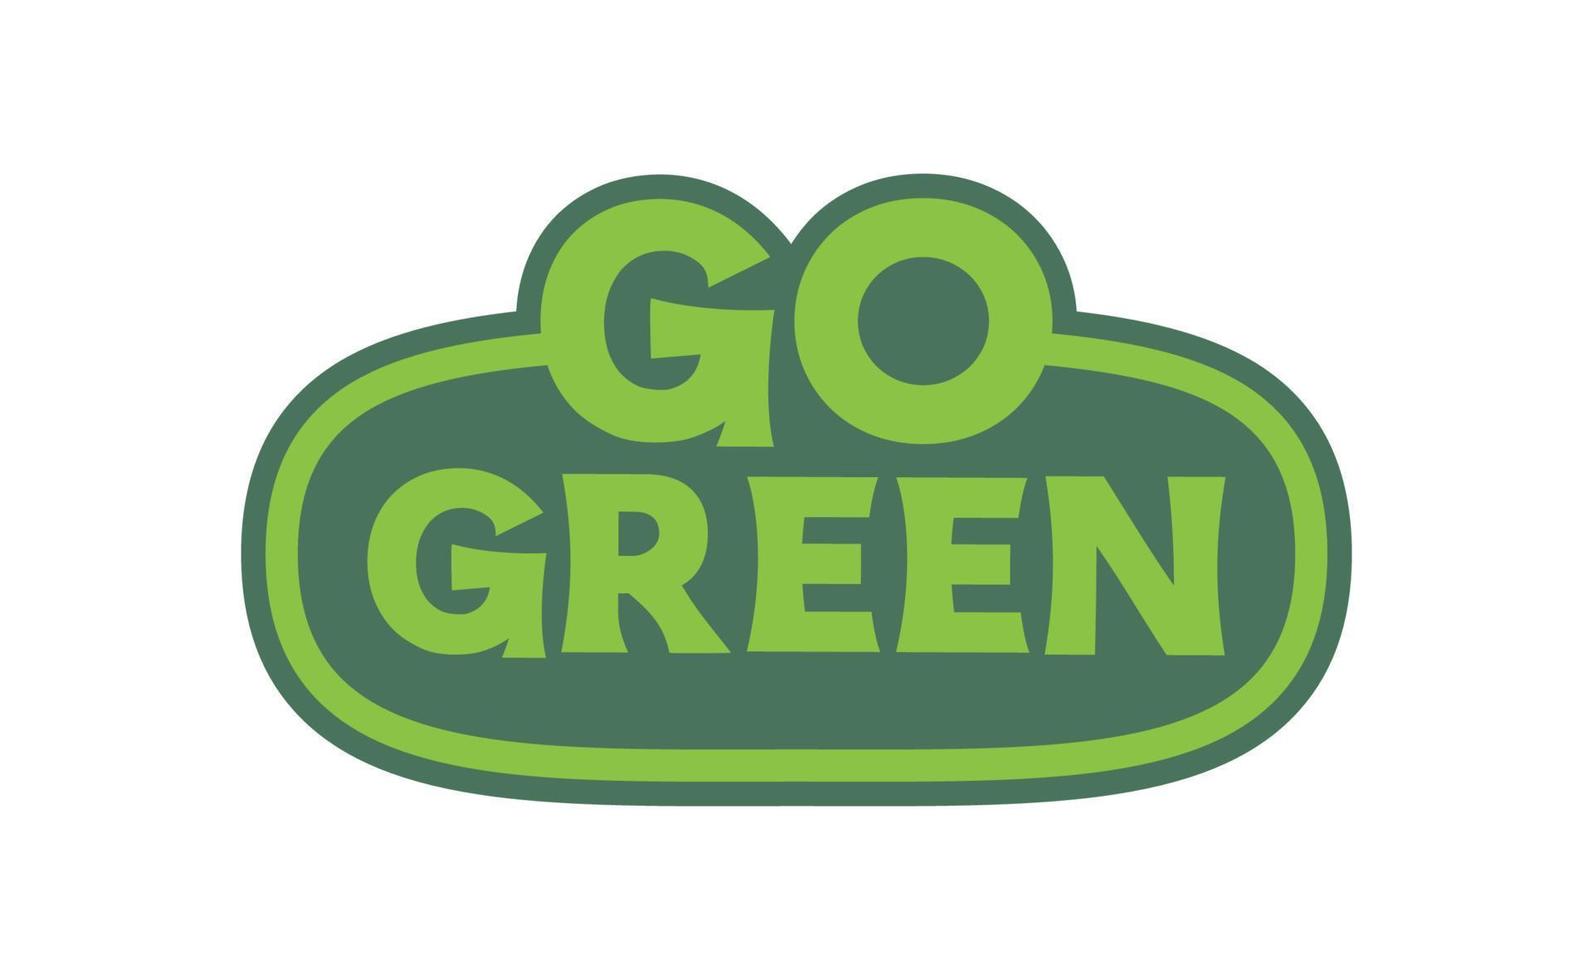 Go Green badge. Eco-friendly slogan. Badge pin with environmental awareness message. vector